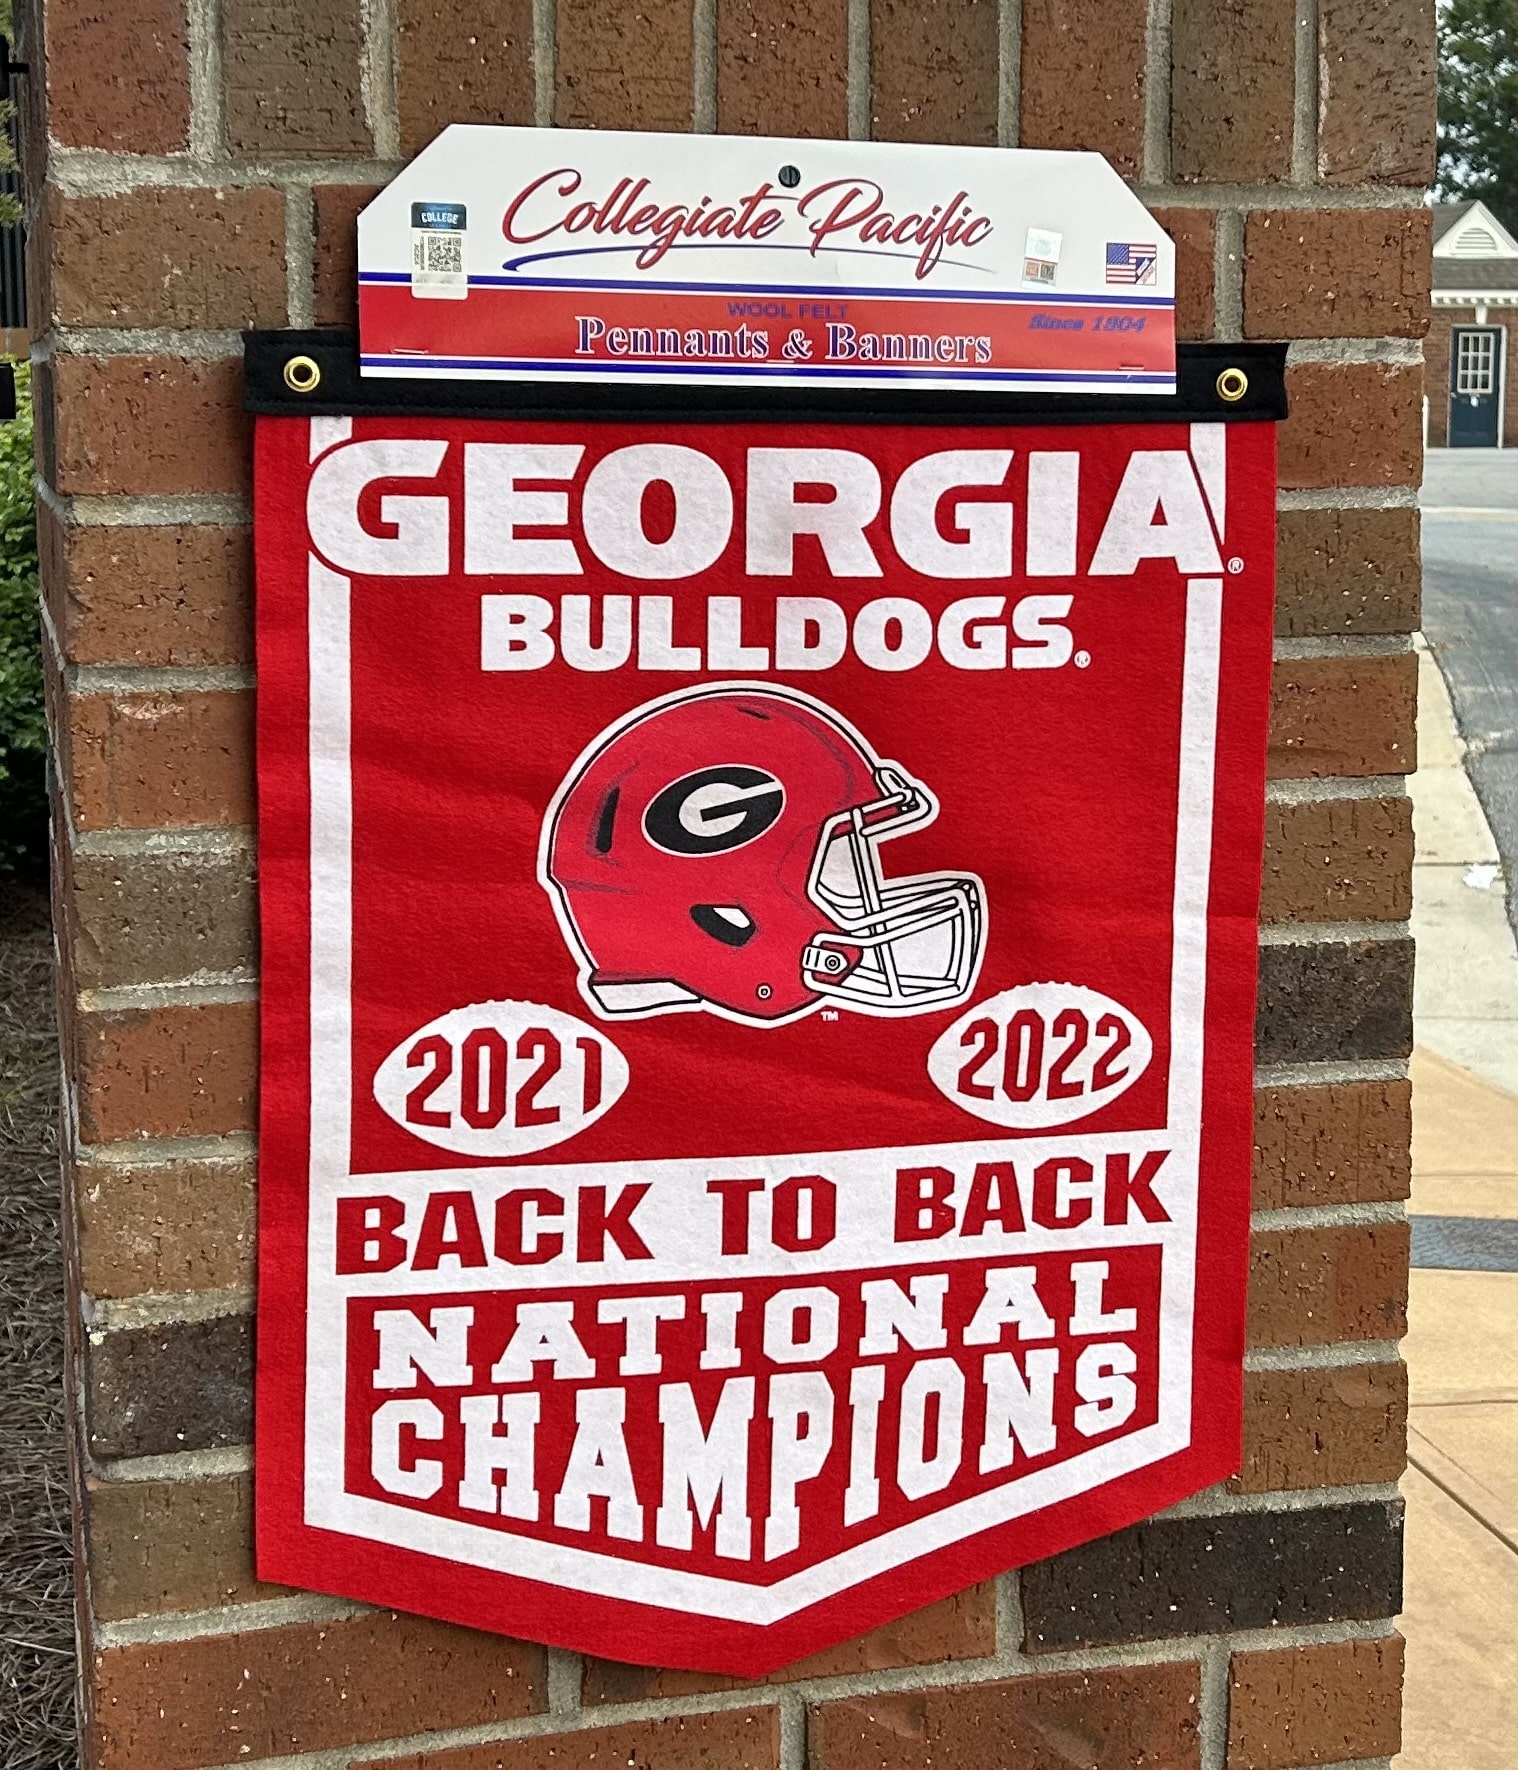 2021 Champions UGA Bulldogs Braves Celebration NCAA National